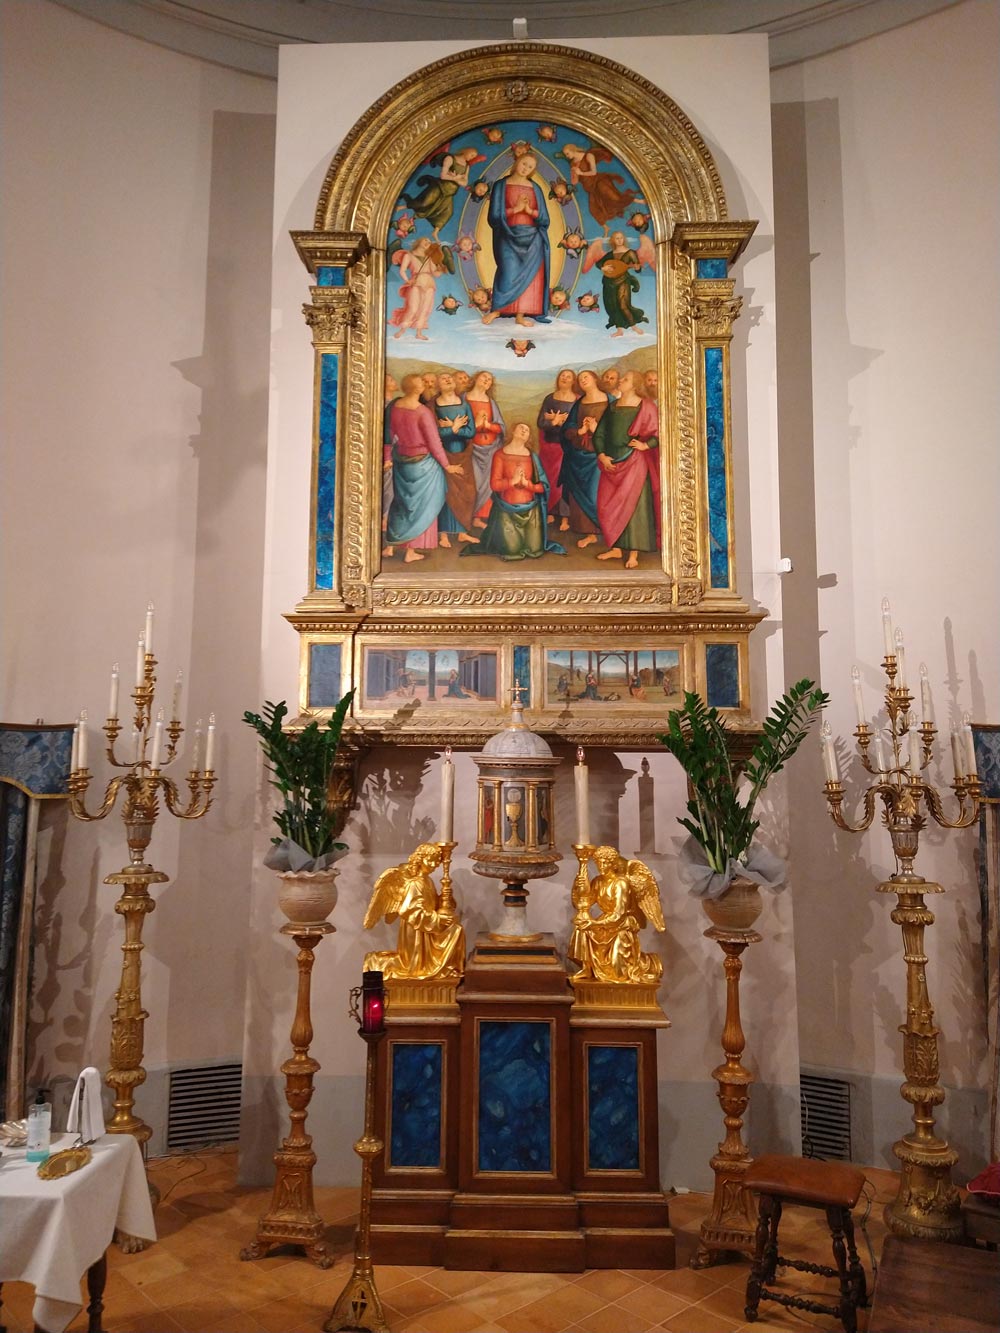 The Corciano Altarpiece in the church of Santa Maria Assunta